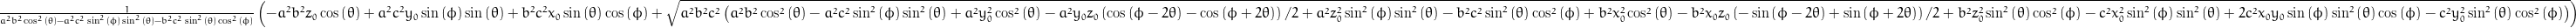 \frac{1}{a^{2} b^{2} \cos^{2}{\left (\theta \right )} - a^{2} c^{2} \sin^{2}{\left (\phi \right )} \sin^{2}{\left (\theta \right )} - b^{2} c^{2} \sin^{2}{\left (\theta \right )} \cos^{2}{\left (\phi \right )}} \left(- a^{2} b^{2} z_{0} \cos{\left (\theta \right )} + a^{2} c^{2} y_{0} \sin{\left (\phi \right )} \sin{\left (\theta \right )} + b^{2} c^{2} x_{0} \sin{\left (\theta \right )} \cos{\left (\phi \right )} + \sqrt{a^{2} b^{2} c^{2} \left(a^{2} b^{2} \cos^{2}{\left (\theta \right )} - a^{2} c^{2} \sin^{2}{\left (\phi \right )} \sin^{2}{\left (\theta \right )} + a^{2} y_{0}^{2} \cos^{2}{\left (\theta \right )} - \frac{y_{0} z_{0}}{2} a^{2} \left(\cos{\left (\phi - 2 \theta \right )} - \cos{\left (\phi + 2 \theta \right )}\right) + a^{2} z_{0}^{2} \sin^{2}{\left (\phi \right )} \sin^{2}{\left (\theta \right )} - b^{2} c^{2} \sin^{2}{\left (\theta \right )} \cos^{2}{\left (\phi \right )} + b^{2} x_{0}^{2} \cos^{2}{\left (\theta \right )} - \frac{x_{0} z_{0}}{2} b^{2} \left(- \sin{\left (\phi - 2 \theta \right )} + \sin{\left (\phi + 2 \theta \right )}\right) + b^{2} z_{0}^{2} \sin^{2}{\left (\theta \right )} \cos^{2}{\left (\phi \right )} - c^{2} x_{0}^{2} \sin^{2}{\left (\phi \right )} \sin^{2}{\left (\theta \right )} + 2 c^{2} x_{0} y_{0} \sin{\left (\phi \right )} \sin^{2}{\left (\theta \right )} \cos{\left (\phi \right )} - c^{2} y_{0}^{2} \sin^{2}{\left (\theta \right )} \cos^{2}{\left (\phi \right )}\right)}\right)